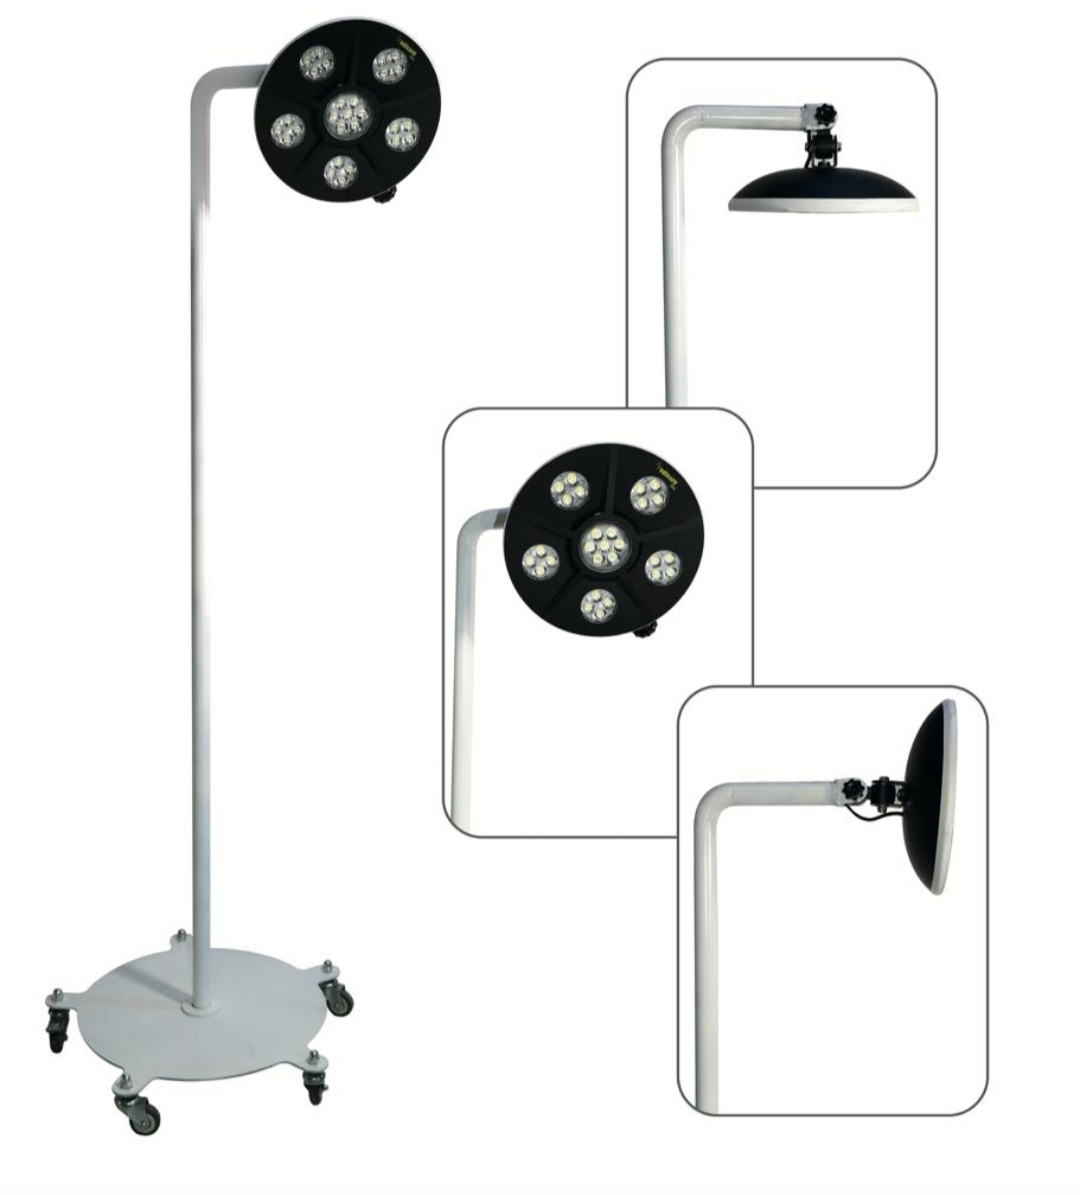 medicare-medical-examination-lamp-march-model